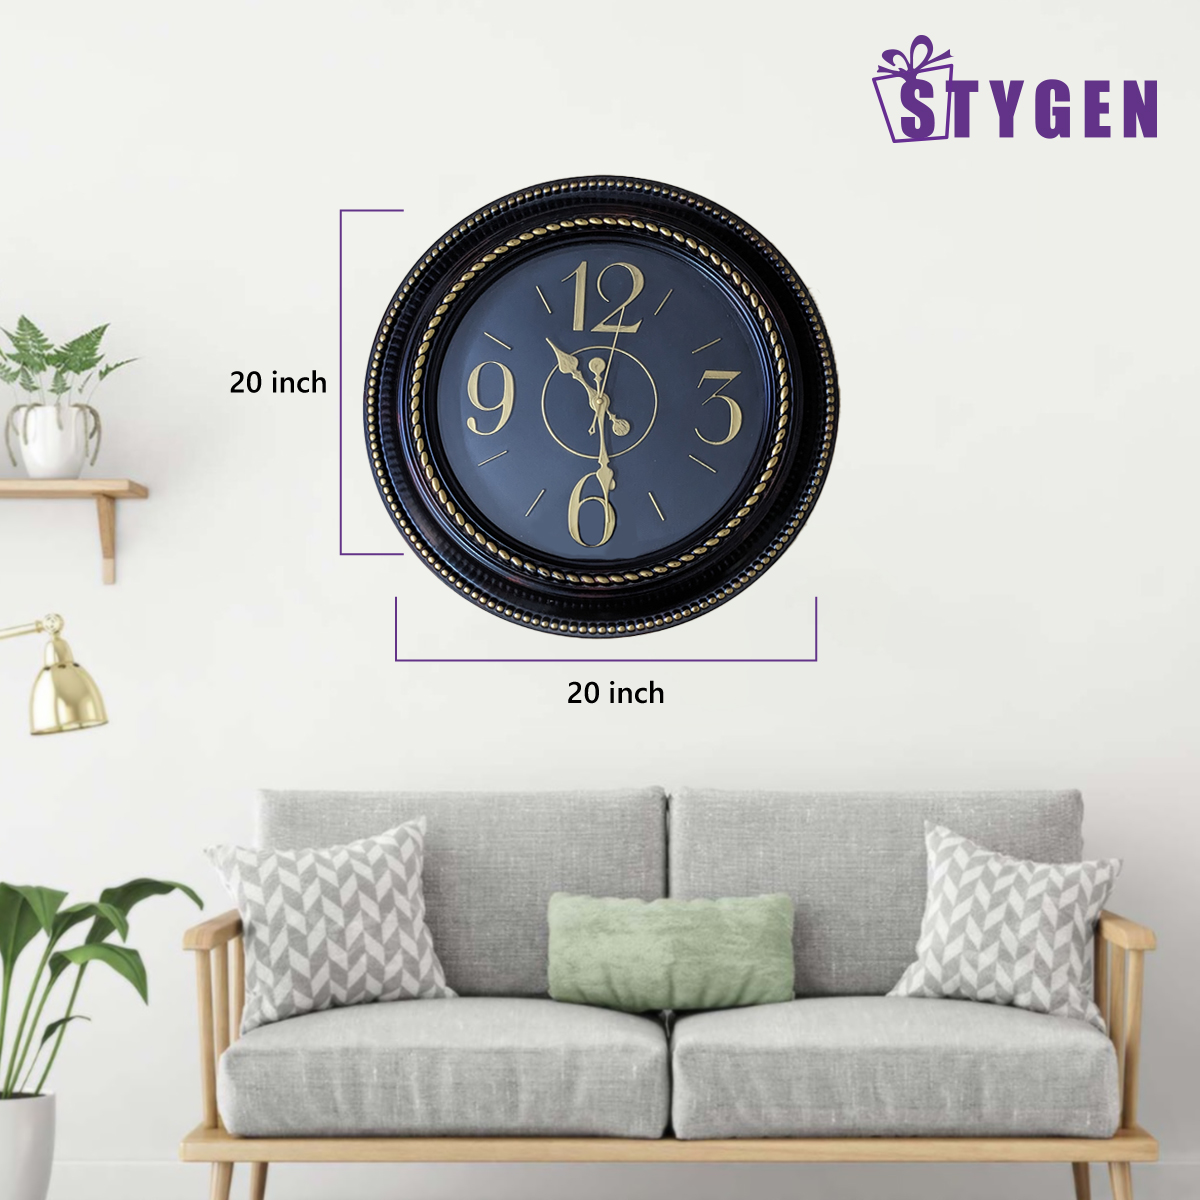 20" Decorative Wall Clock